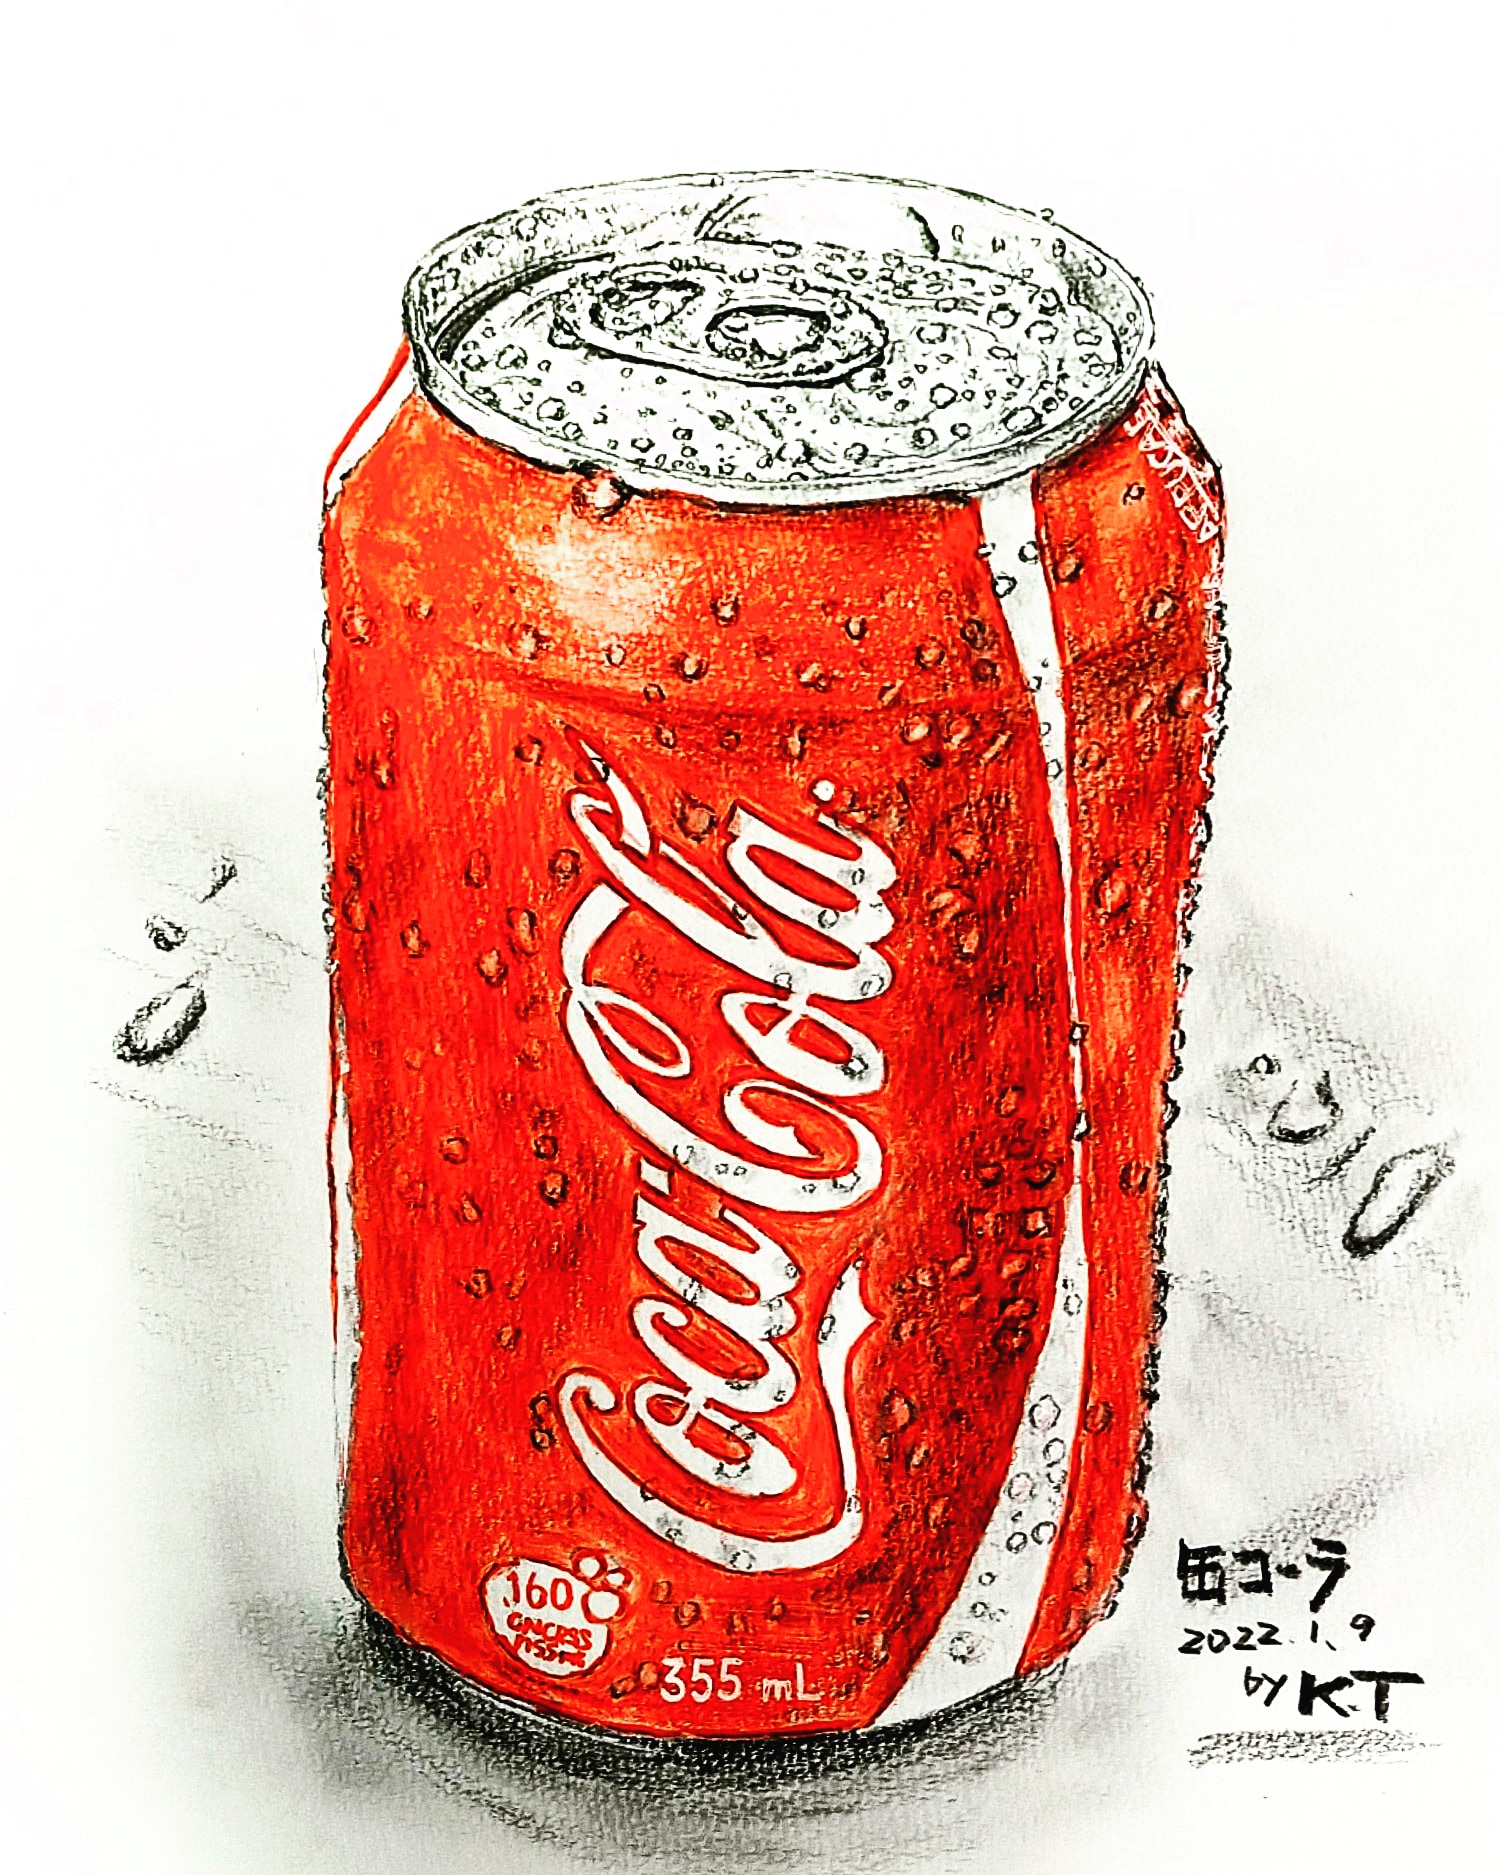 Twitter 上的 T Kouji0114 缶コーラ 色鉛筆で描いてみた 色鉛筆画 デッサン イラスト コカ コーラ 鉛筆画 絵描き T Co 2tx8k6cn8c Twitter